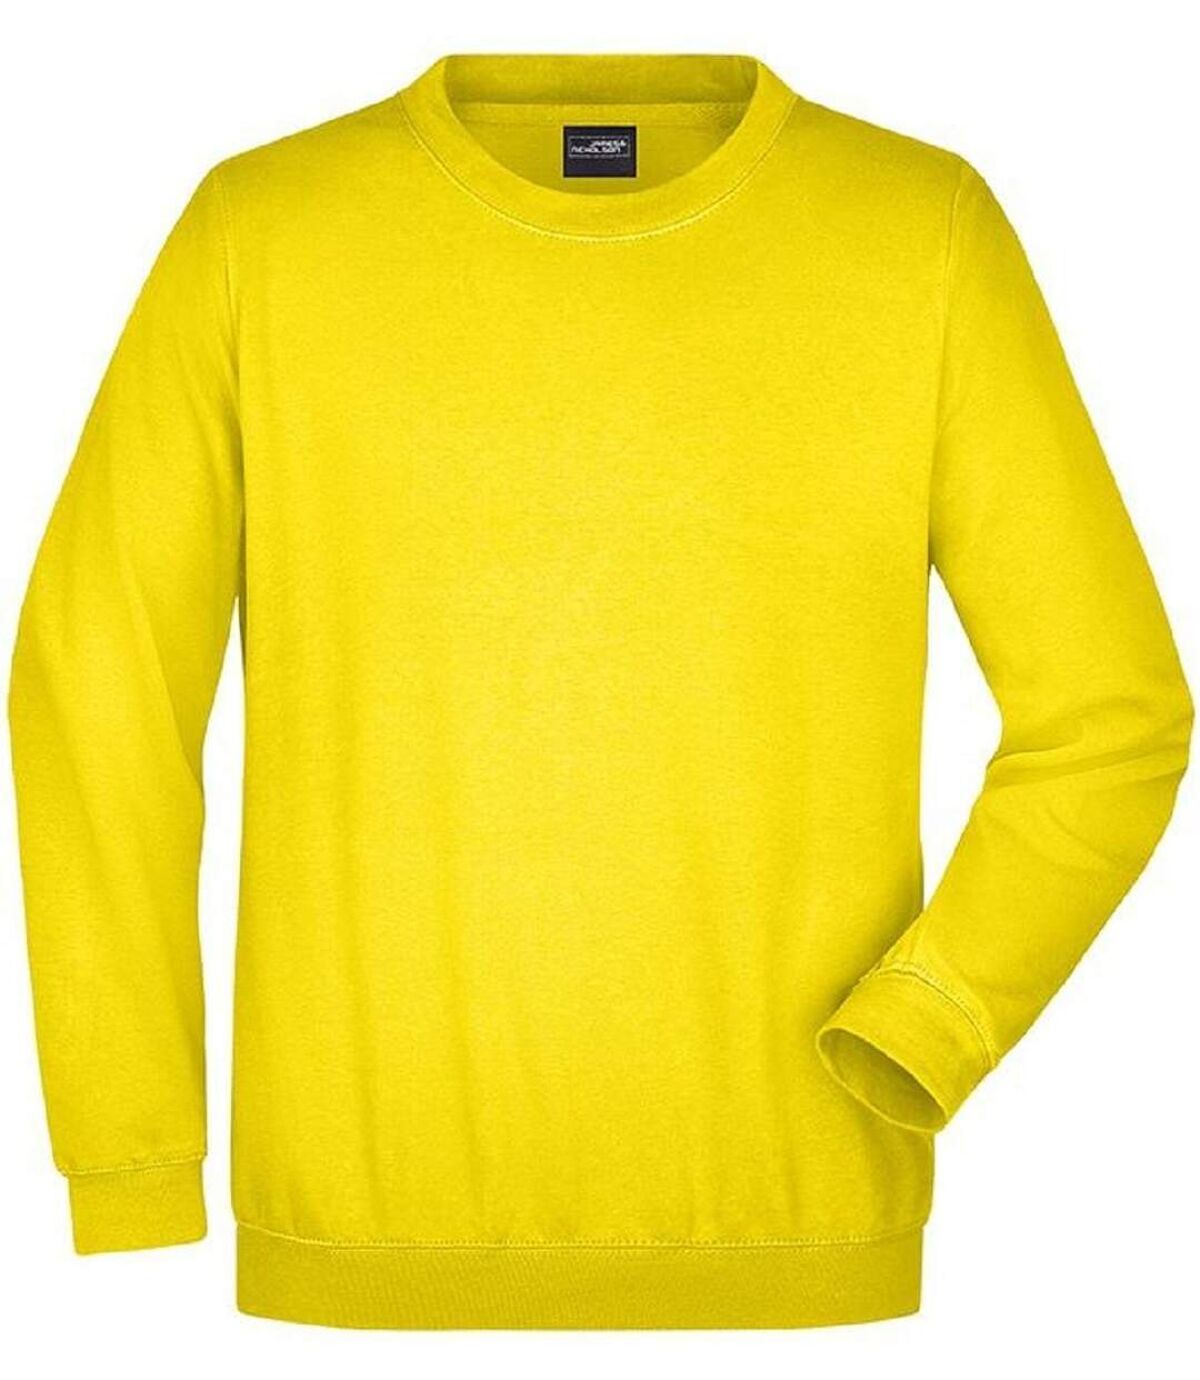 Sweat-shirt col rond - JN040 - jaune soleil - mixte homme femme